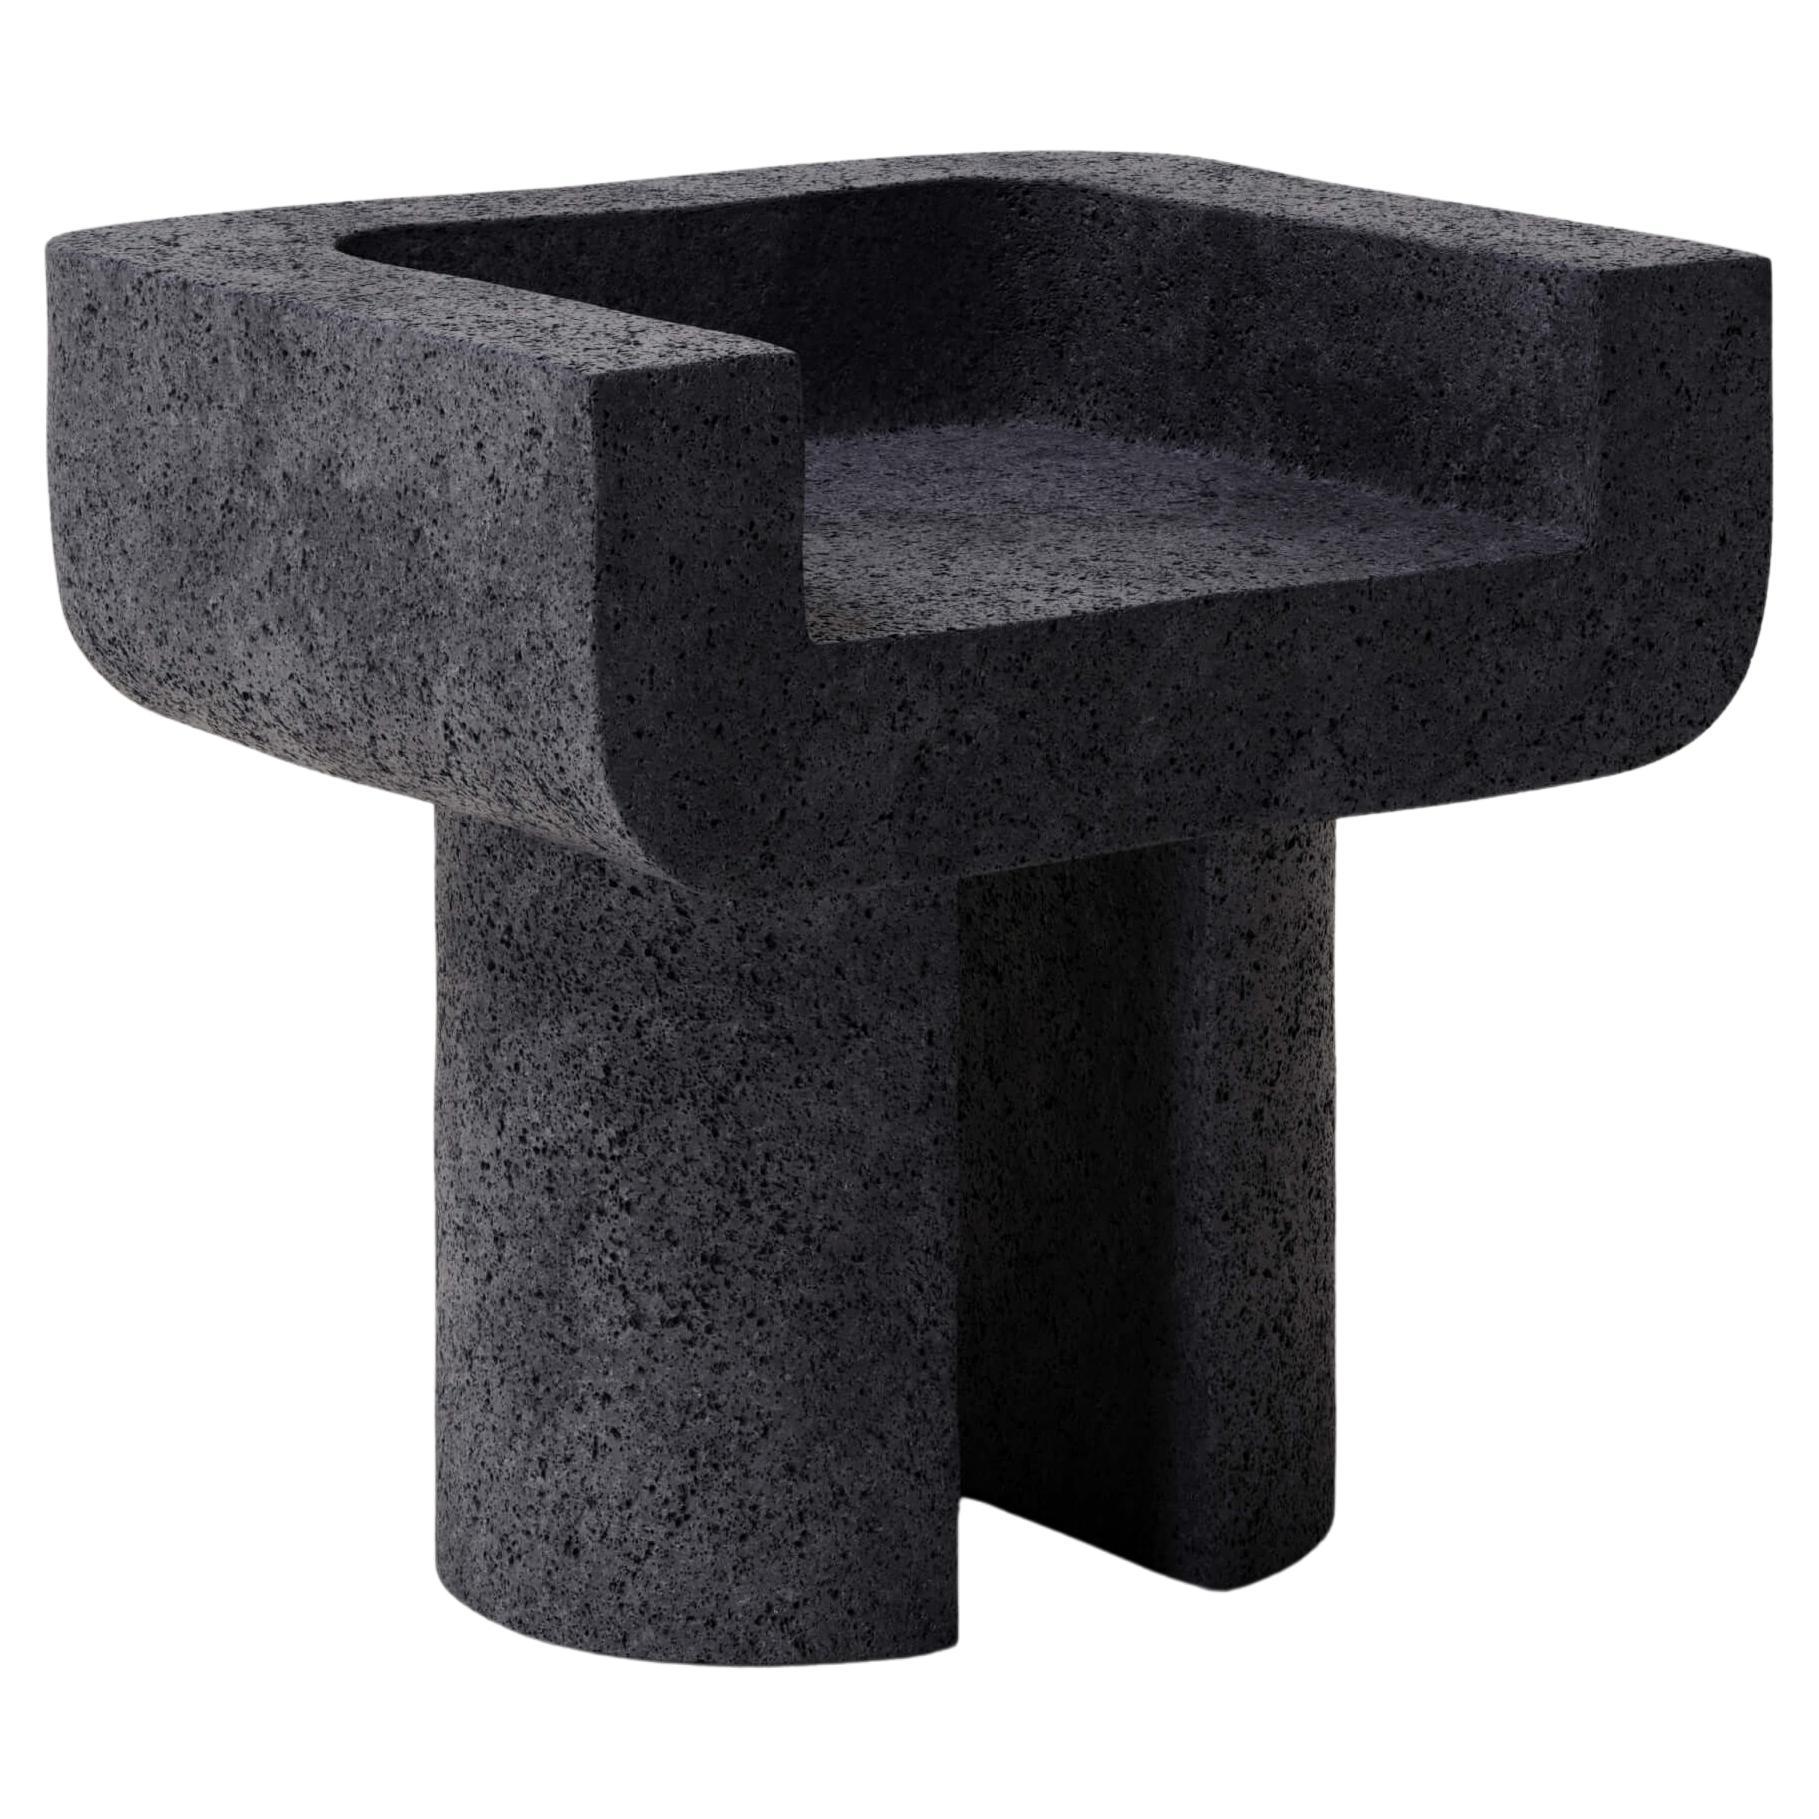 M_001 Lava Rock Chair by Monolith Studio For Sale